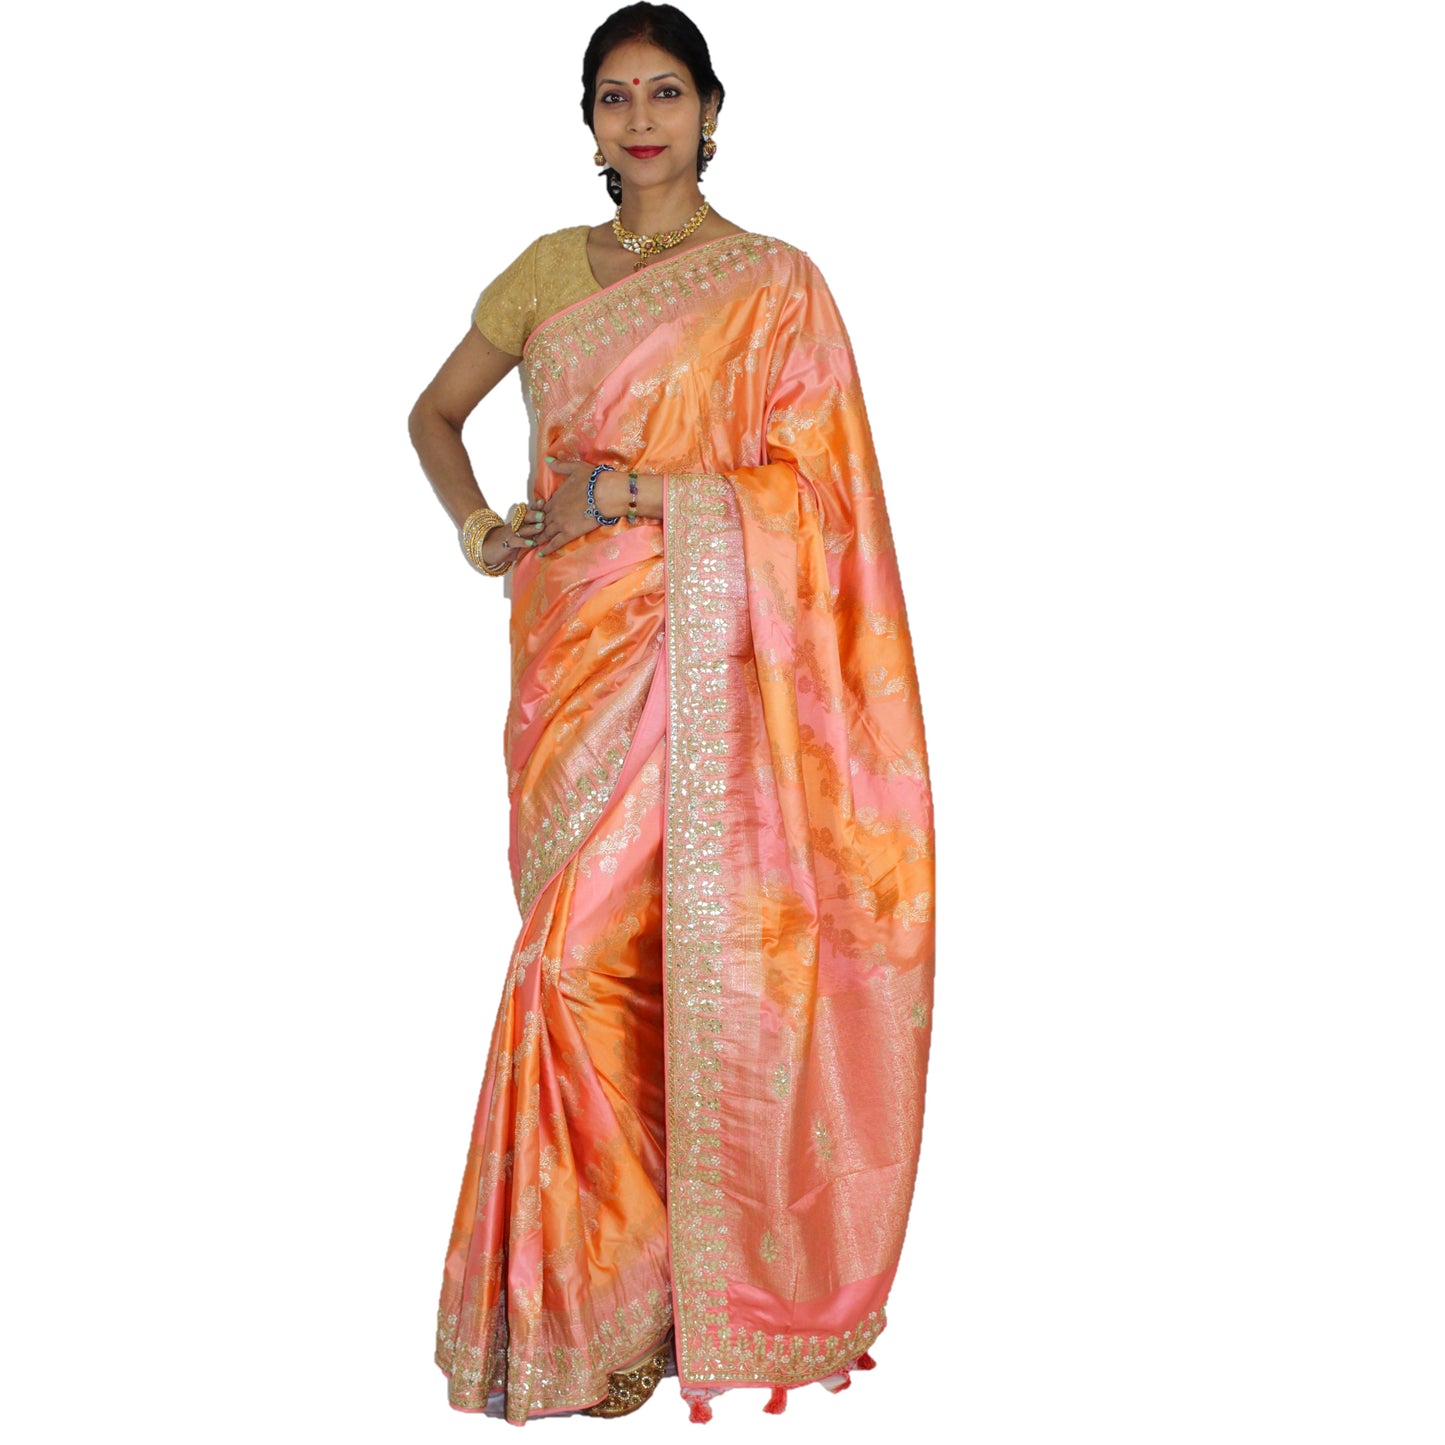 Maharani's Pure Banarasi Silk Rangkat Saree - Shades of Peach/Pink/Orange (with Stitched Petticoat)